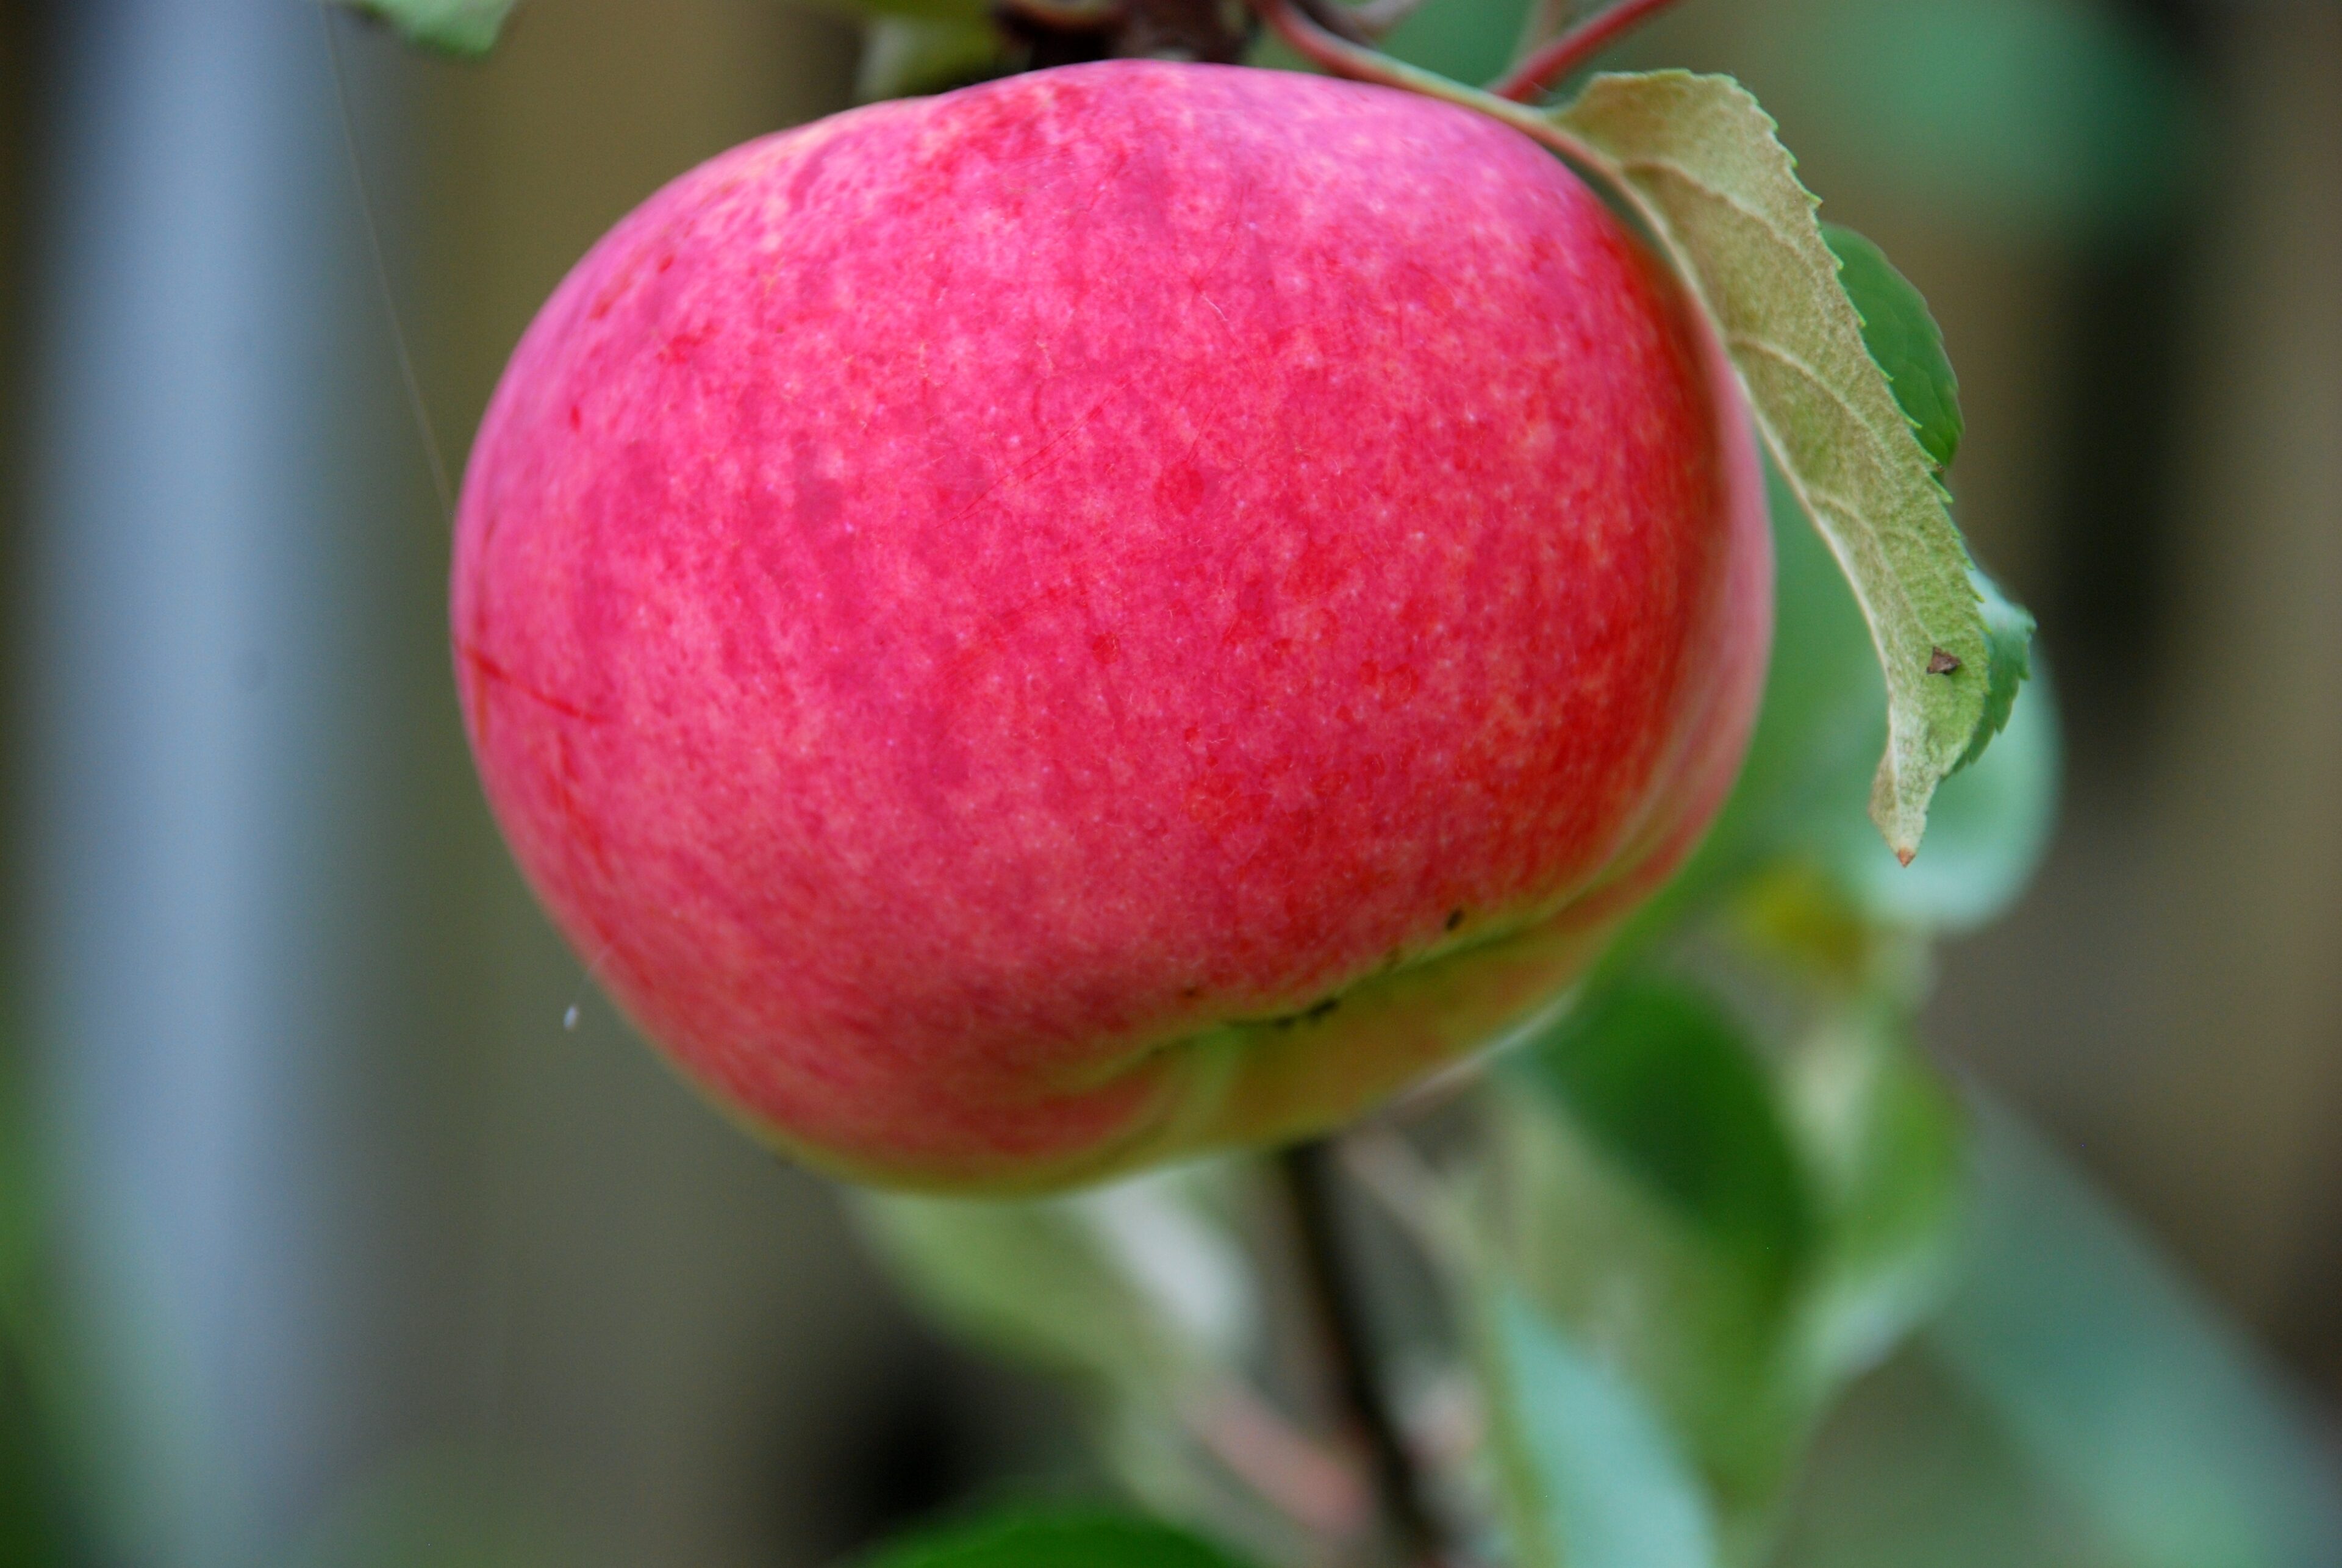 A Medium-Sized Apple